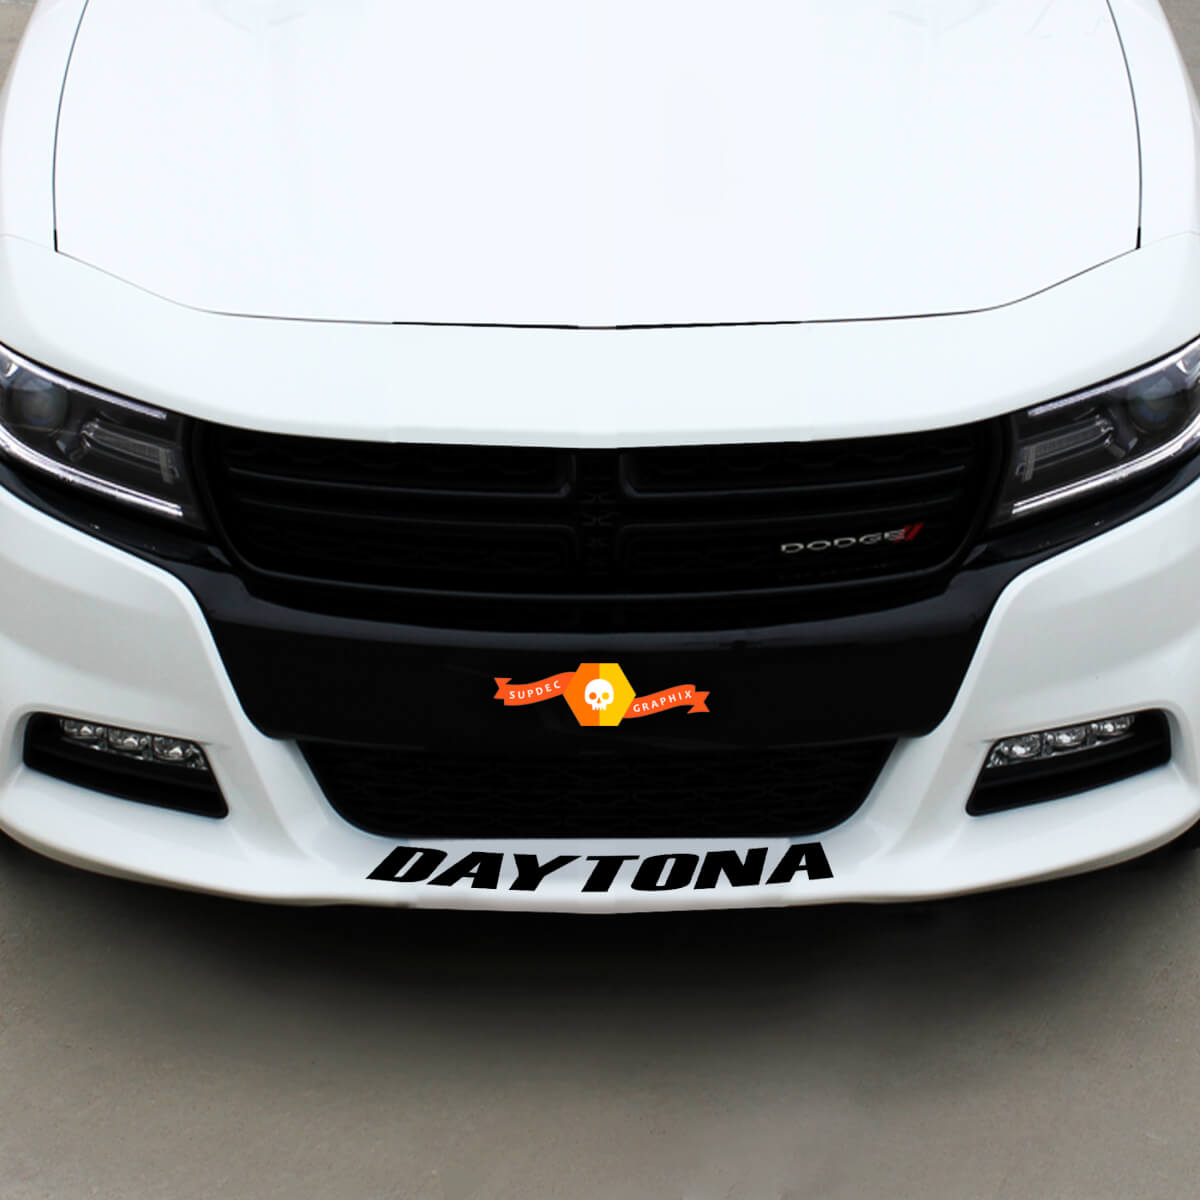 Dodge Daytona Retro Front Spoiler Aufkleber Aufkleber Grafiken passt zu allen Modellen